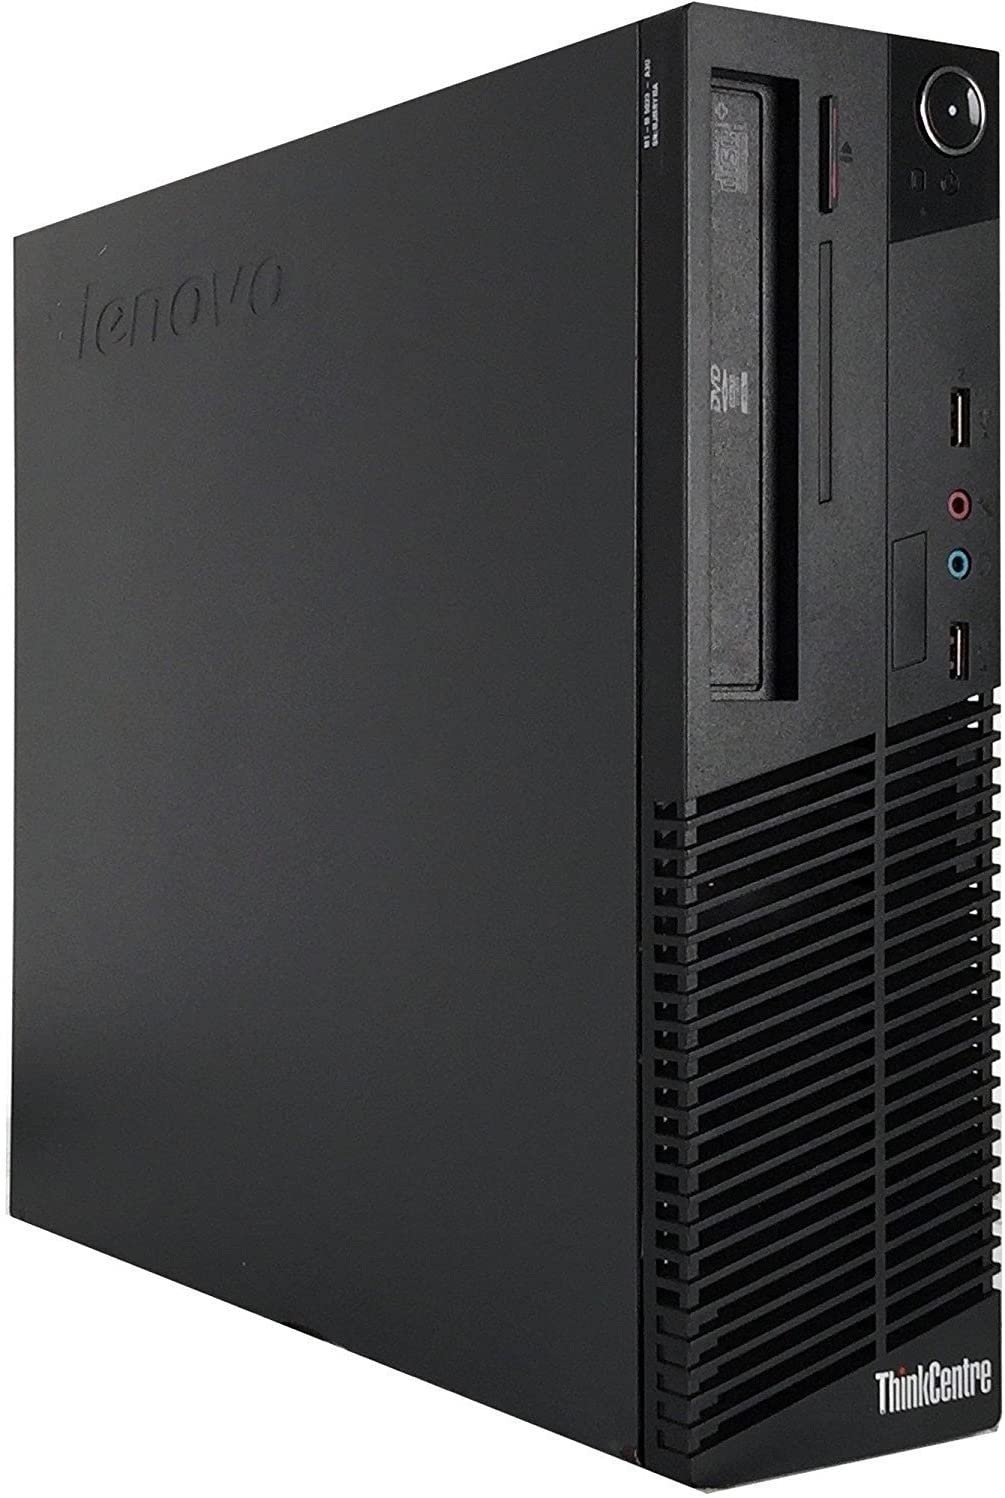 Lenovo M82 SFF Business Desktop, Intel Core i3-2120,8GB RAM, 500GB HDD,DVD, Win10 Pro Wi-Fi(Renewed)